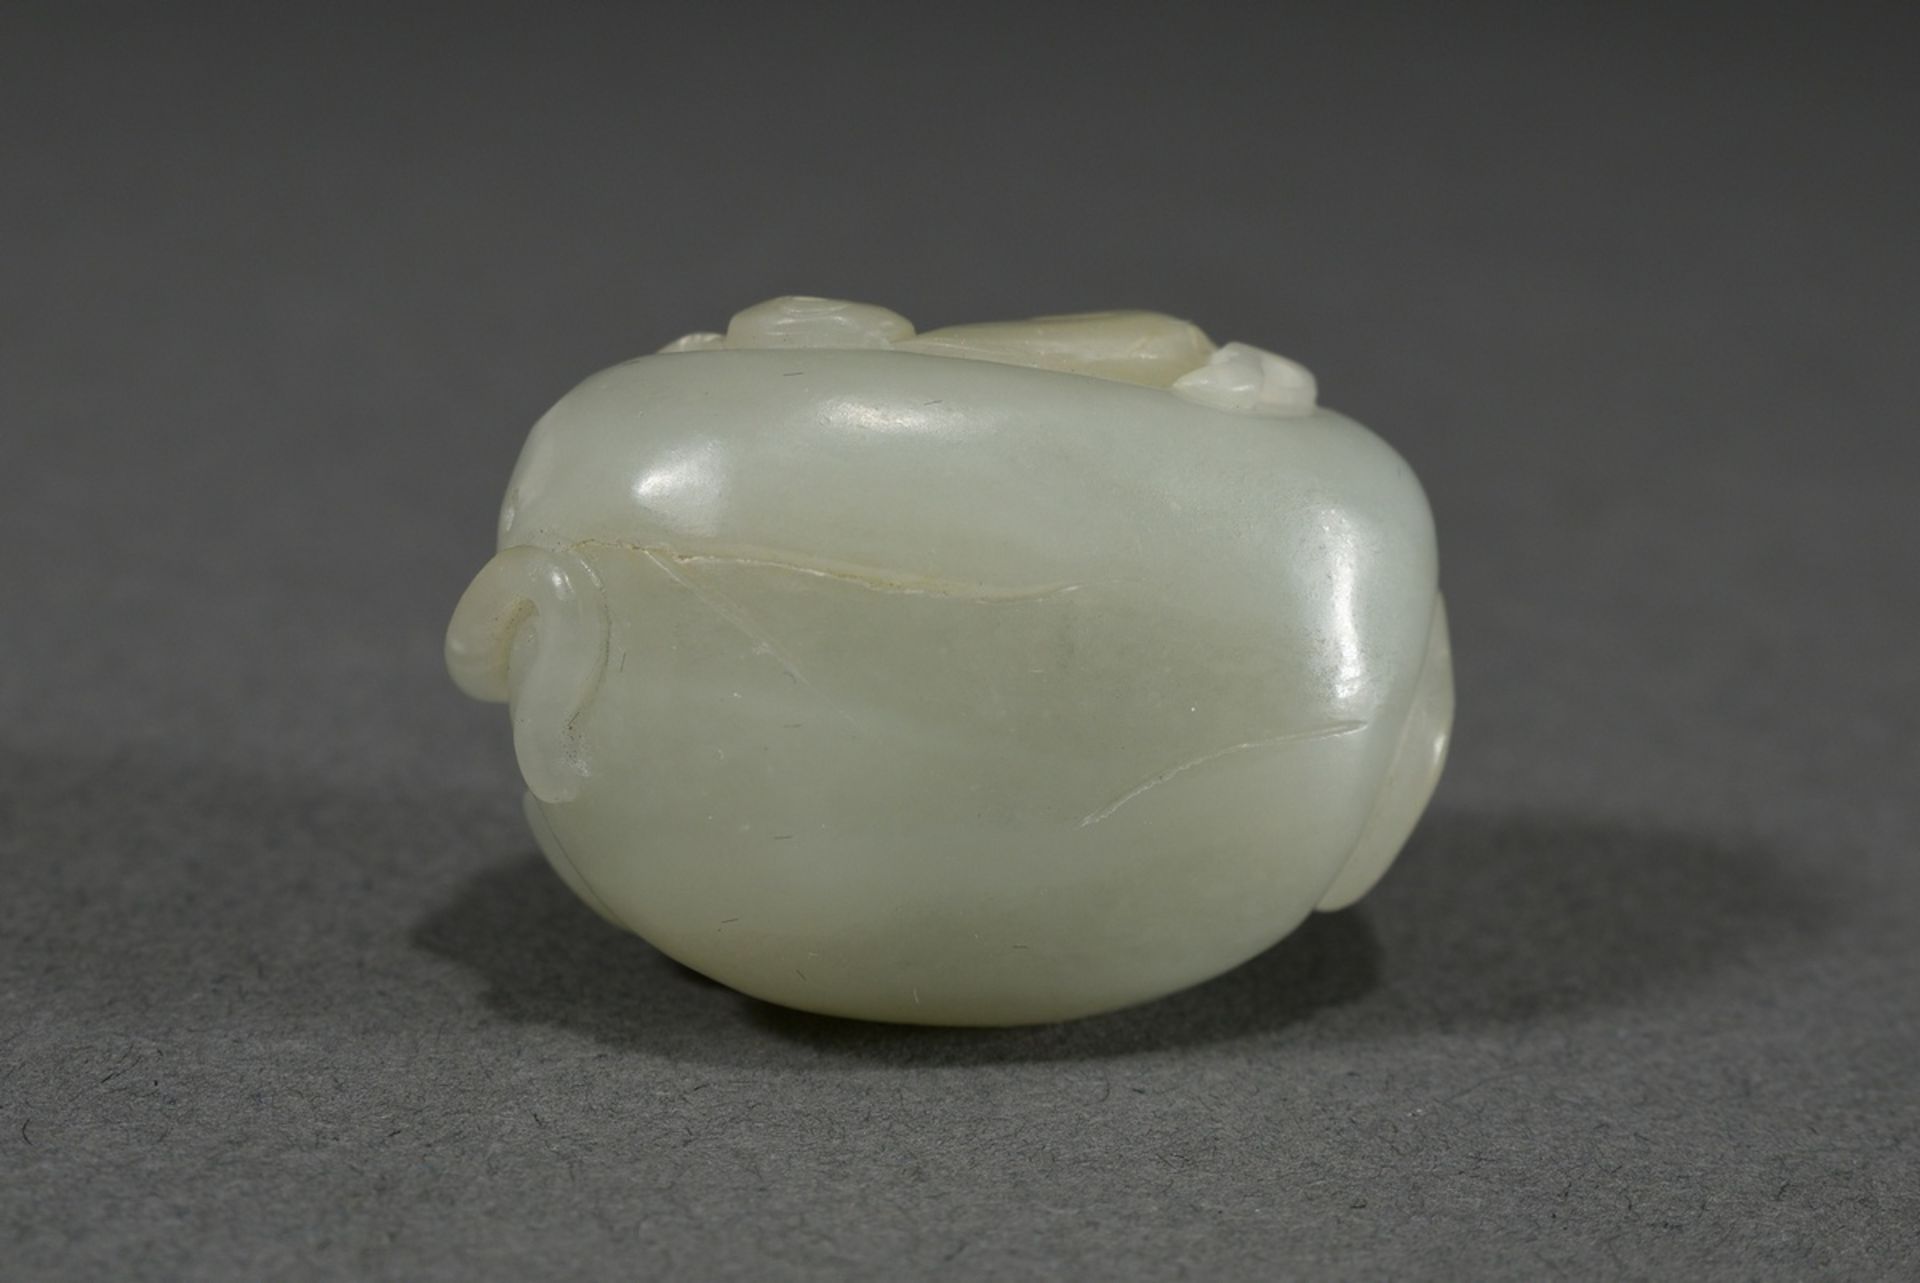 Fine celadon jade toggle "Tiger and monkey on rocks", China, 3.7x2.5x1.9cm - Image 2 of 4